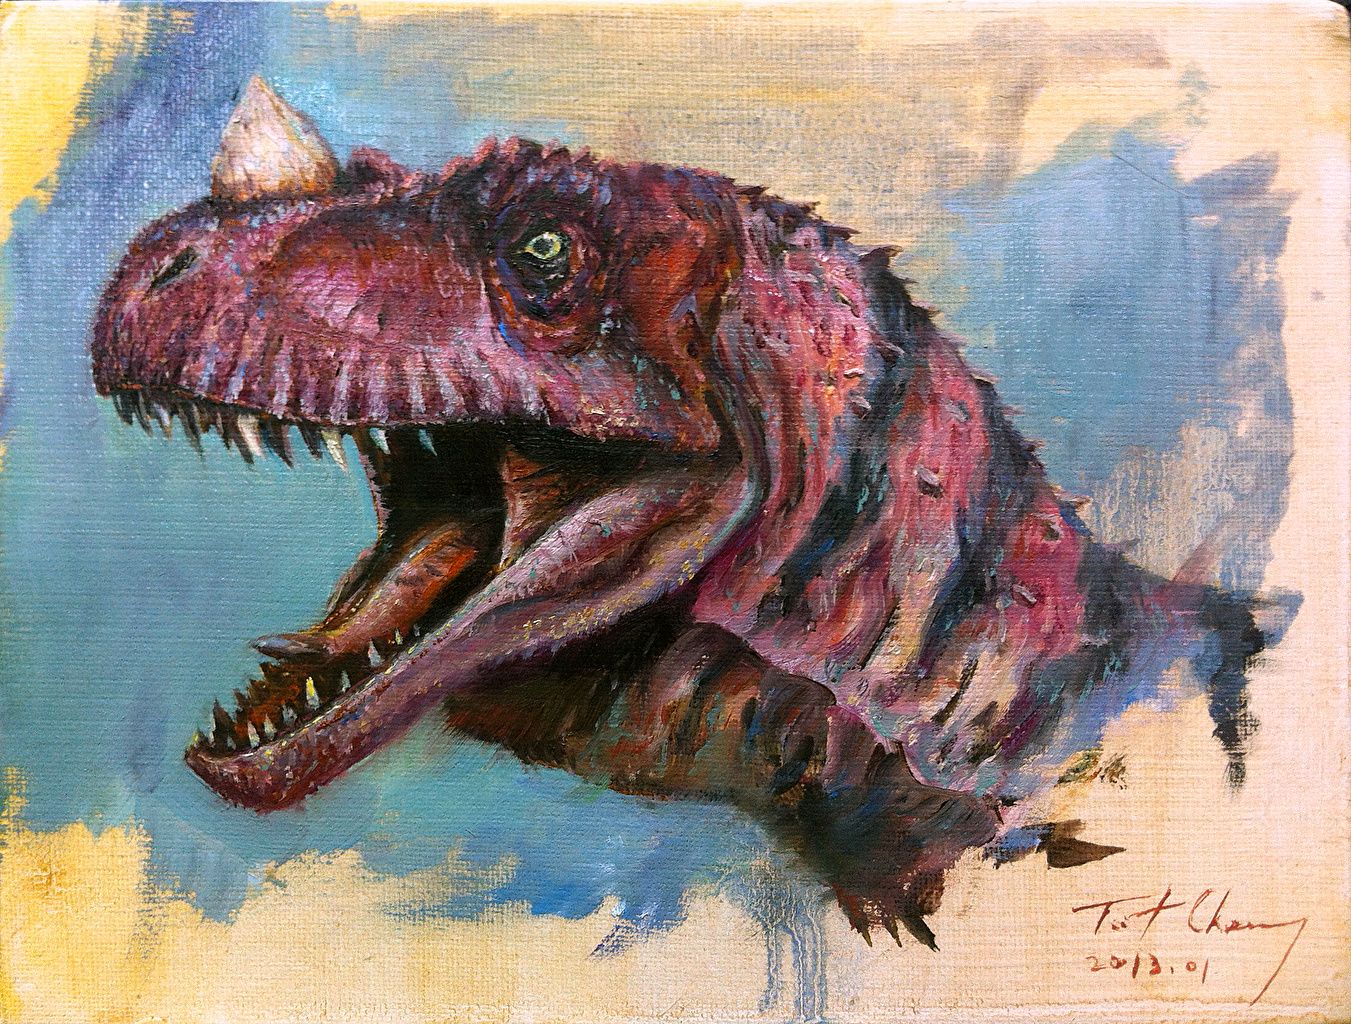 Wallpaper Dinosaurs Ceratosaurus Teeth angry Head animal Painting